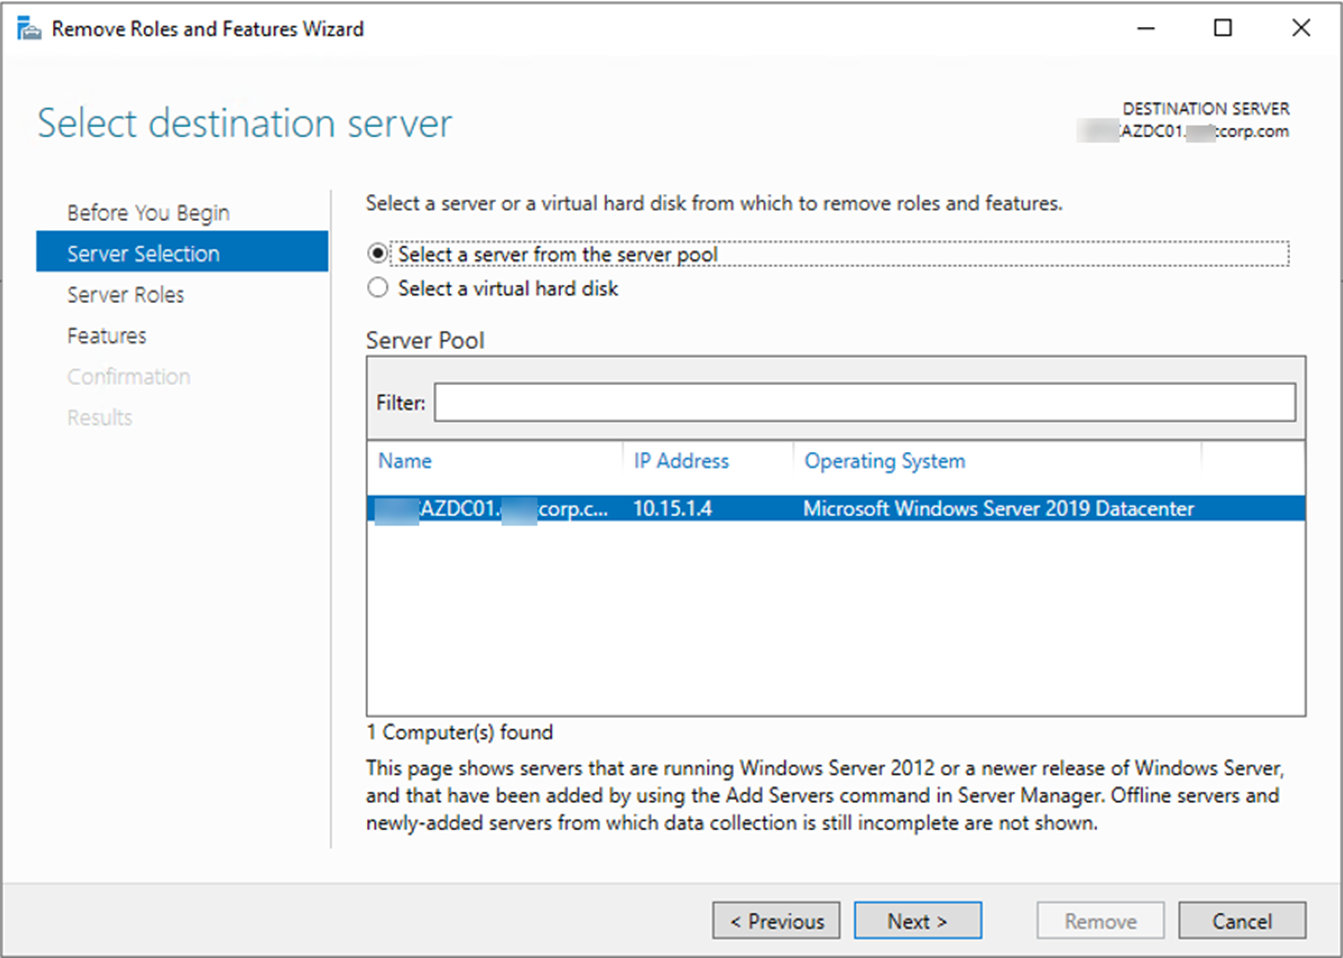 101120 0520 HowtoDemote8 - How to Demote Microsoft Windows Server 2019 Domain Controller Virtual Machine at Azure